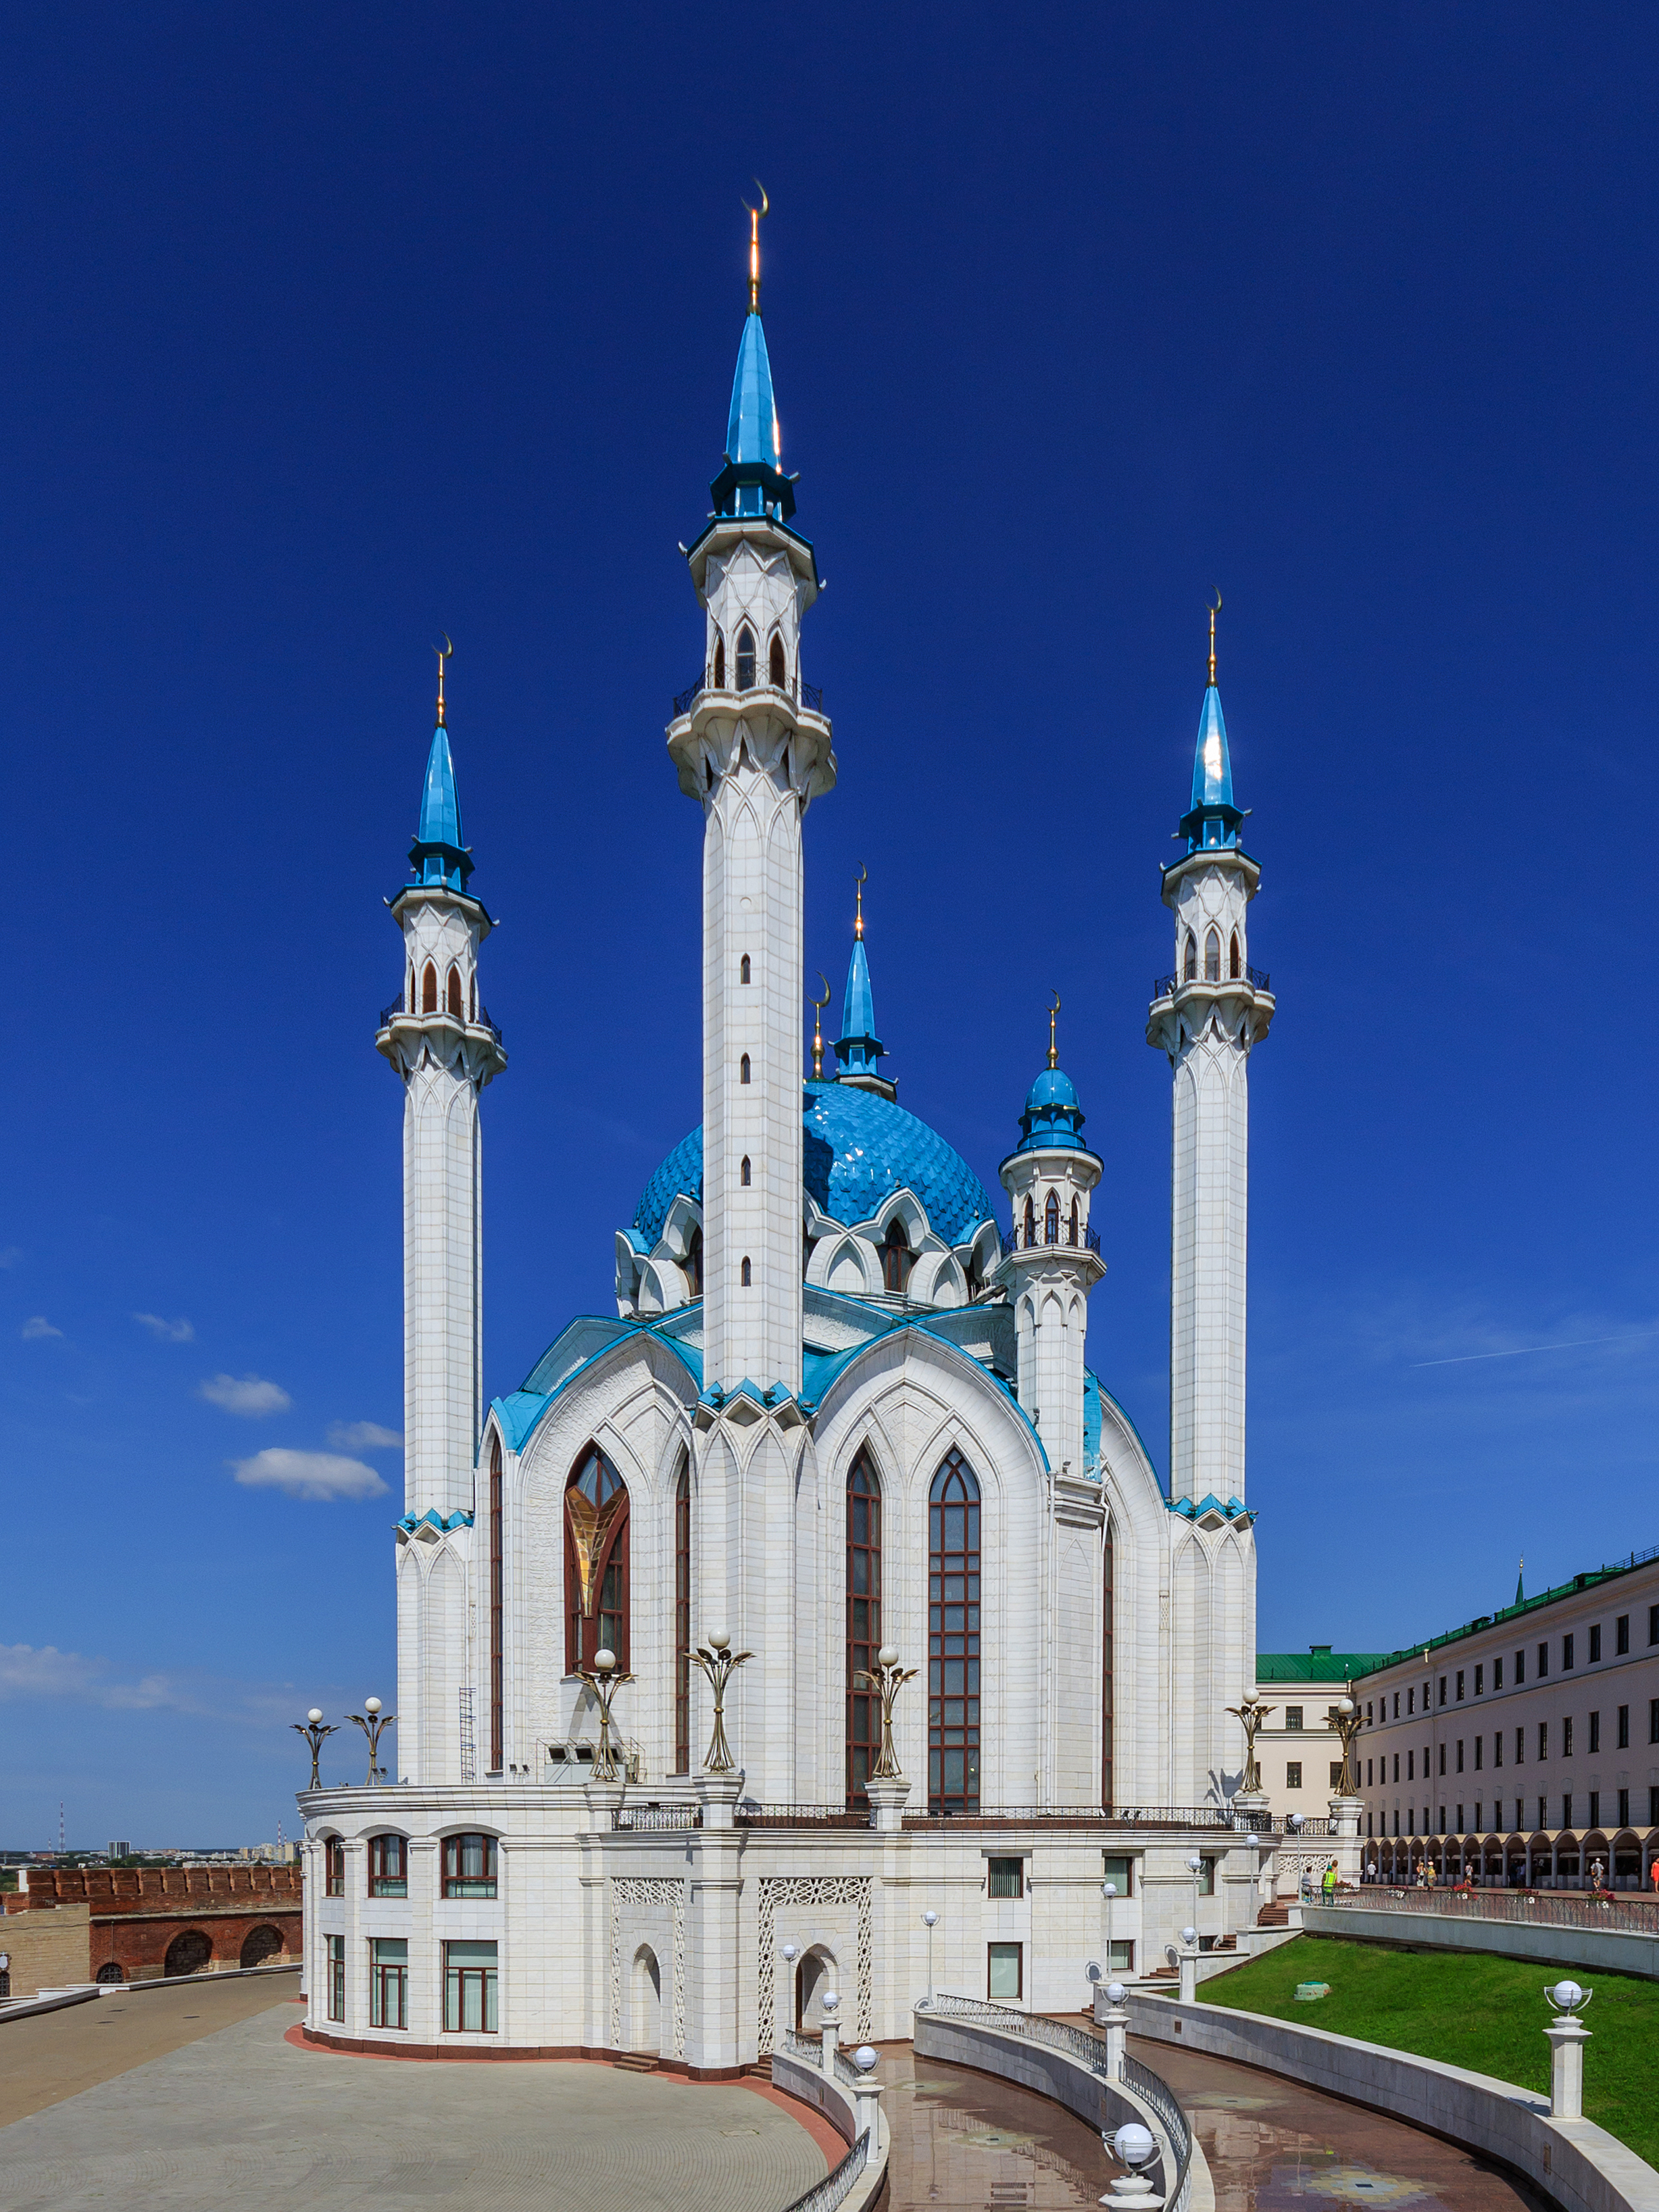 File:Kazan Kremlin Qolsharif Mosque 08-2016 img1.jpg - Wikimedia Commons